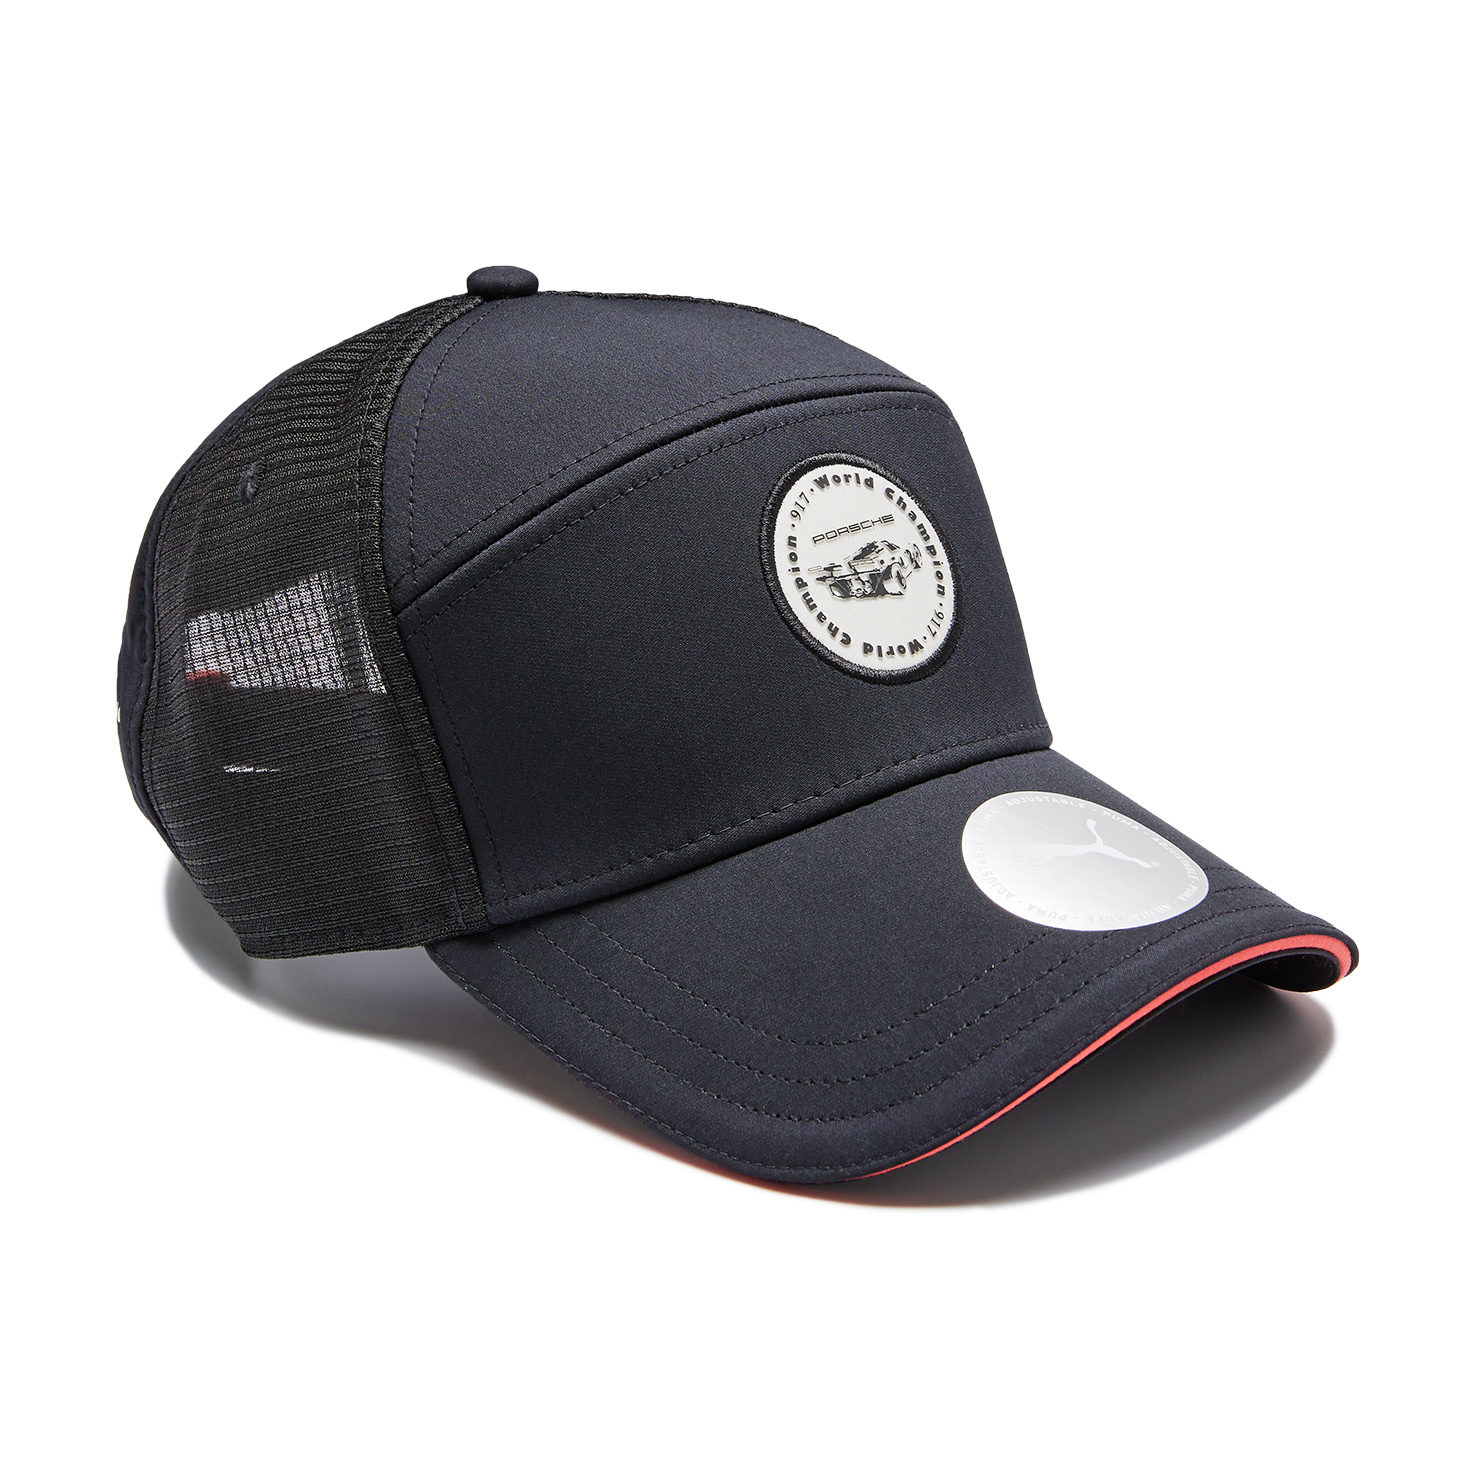 PORSCHE LEGACY STATUS BASEBALL CAP PUMA, размер Один размер, цвет черный PM023725 - фото 1